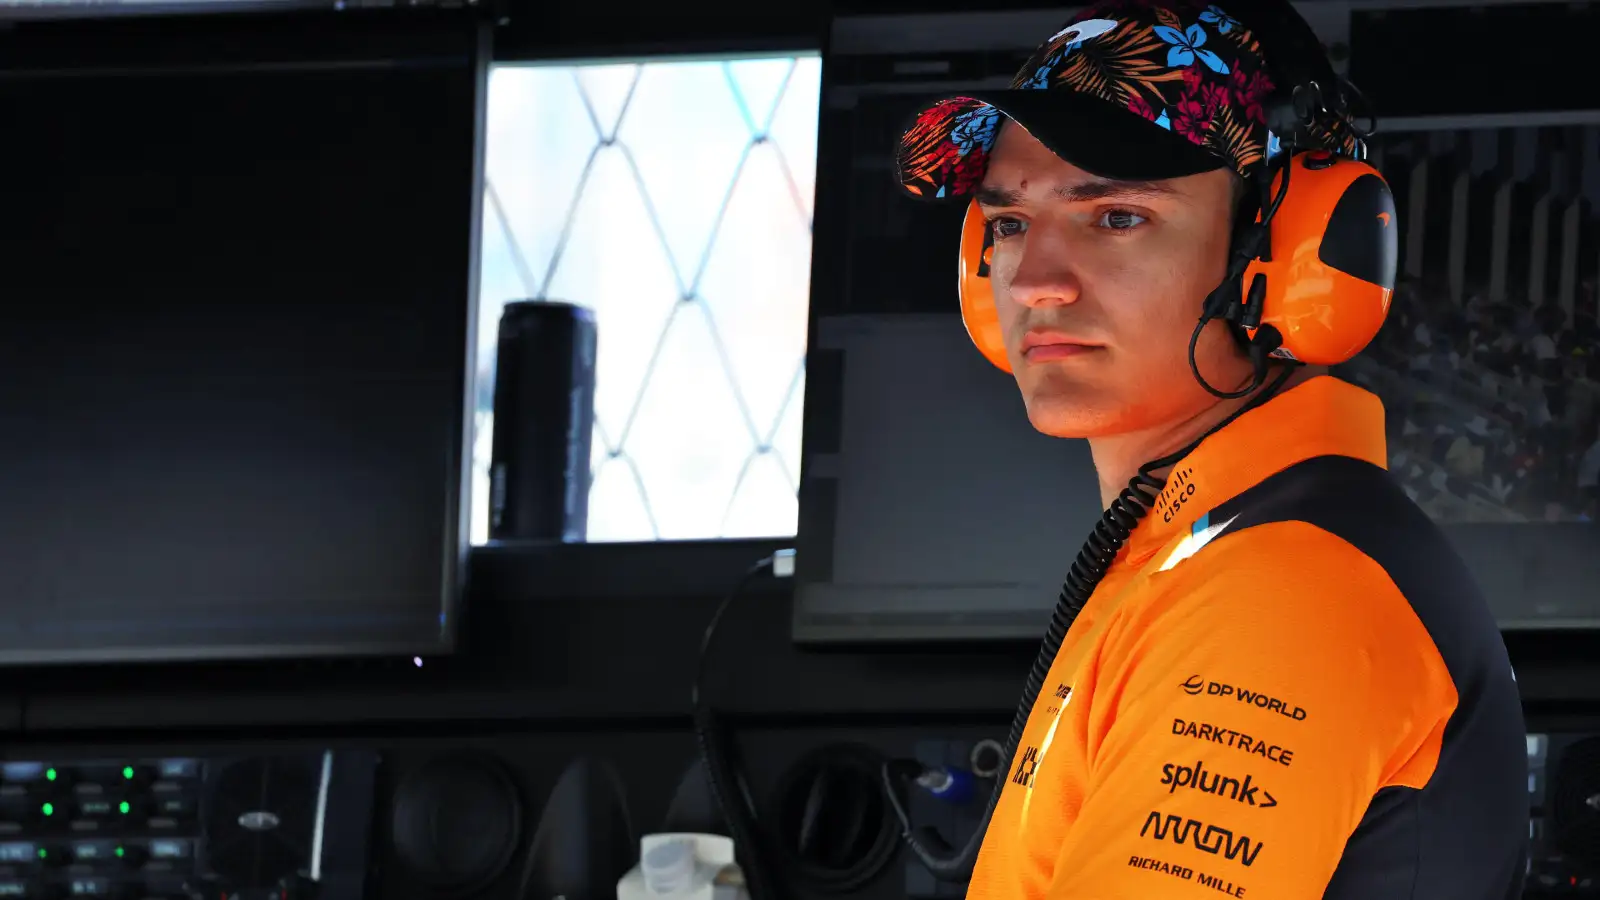 McLaren reserve Alex Palou watches on at the Miami Grand Prix.